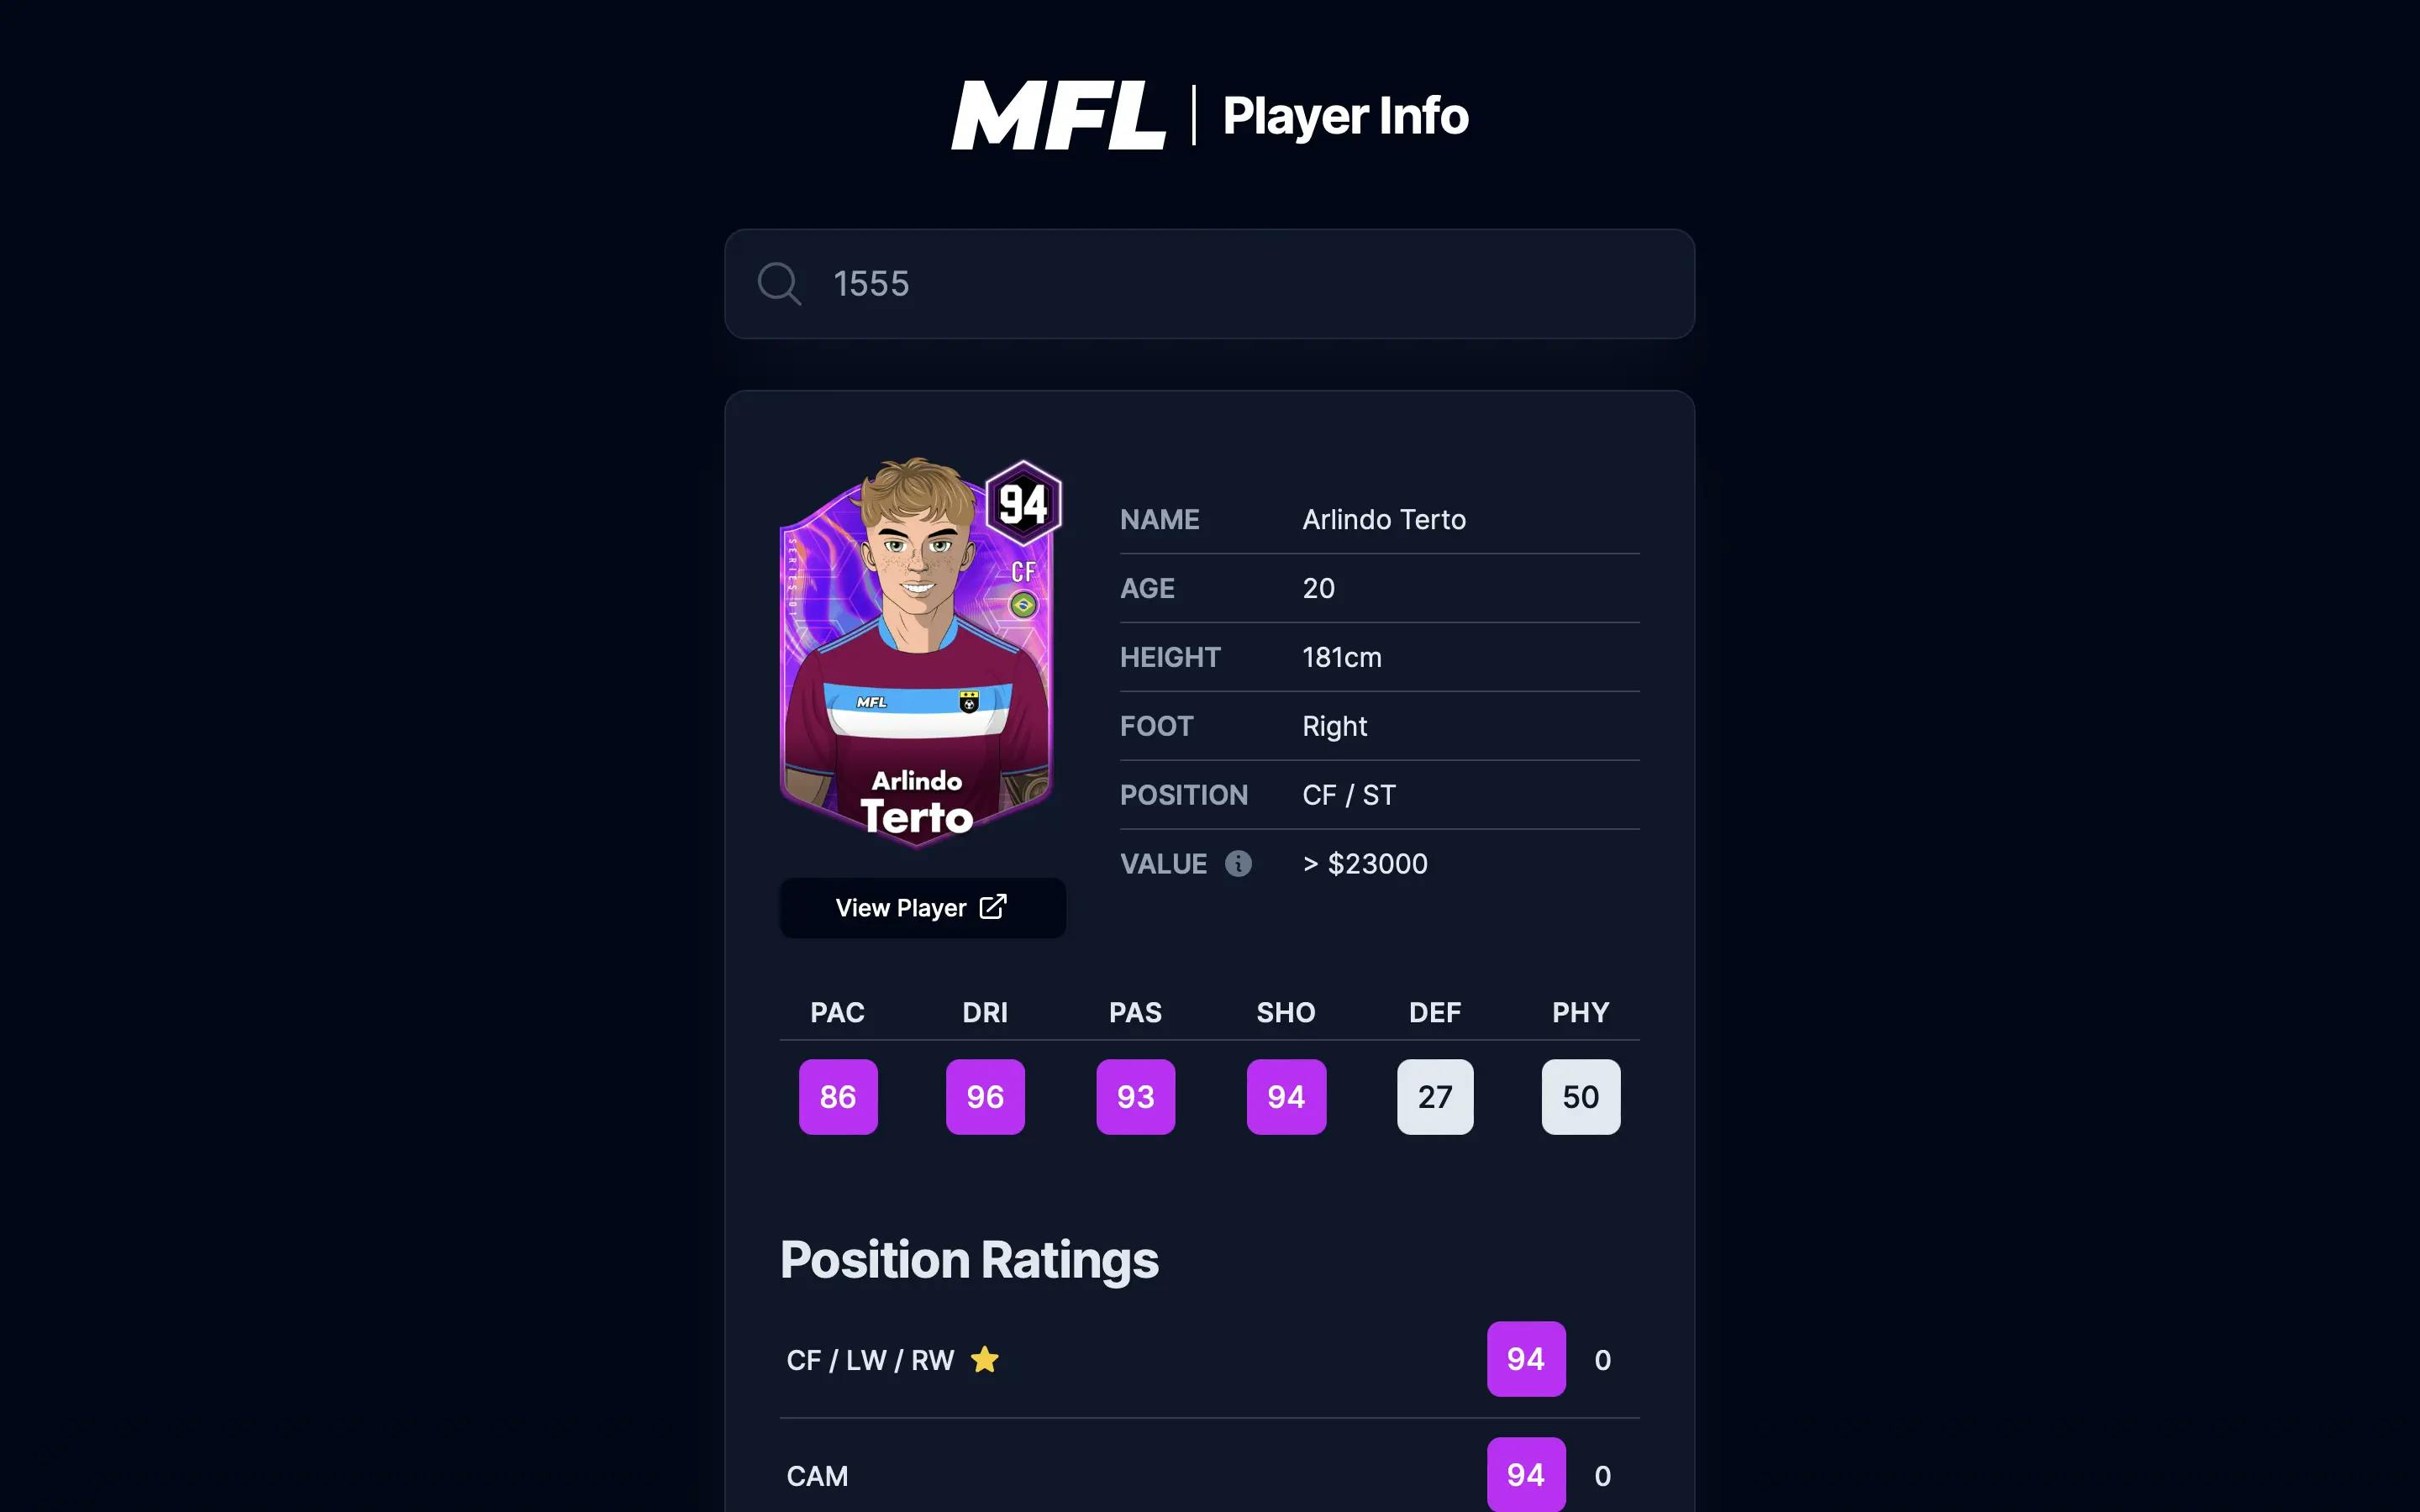 MFL Player Info